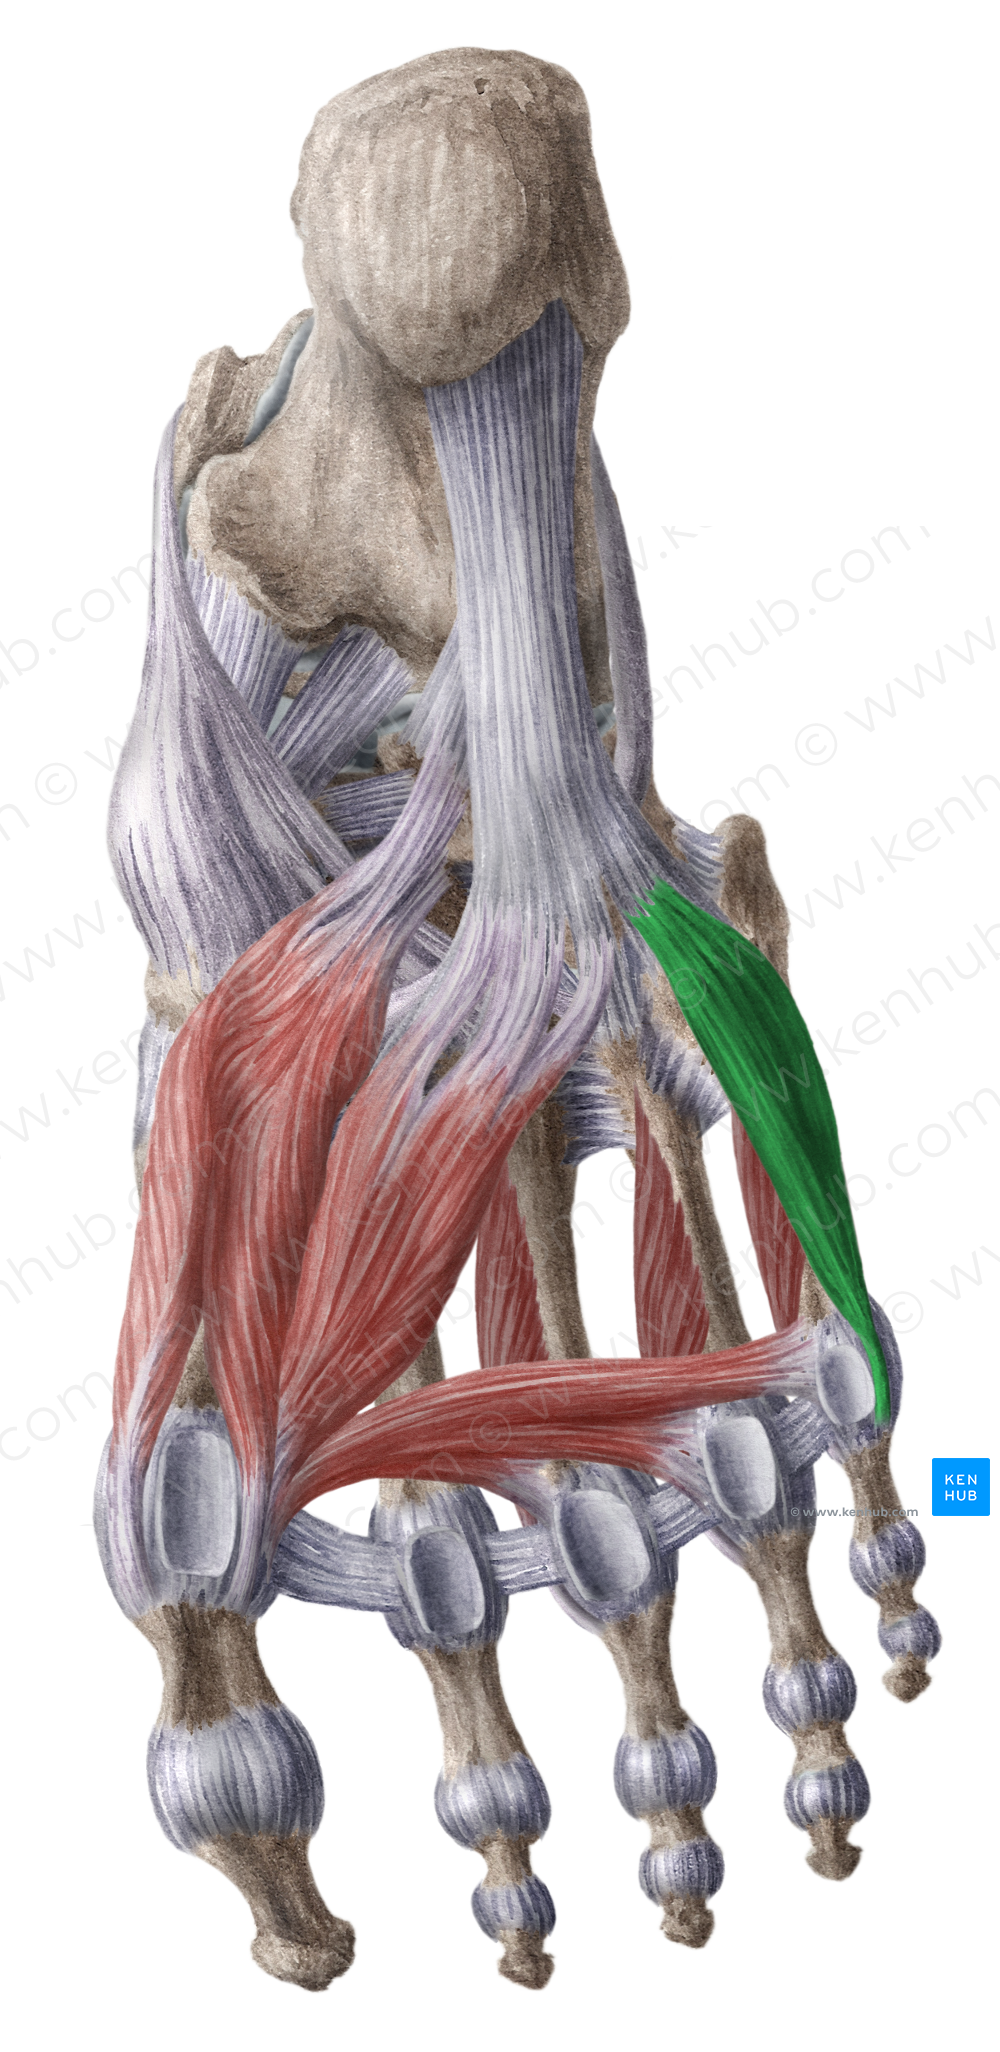 Flexor digiti minimi brevis muscle of foot (#5361)